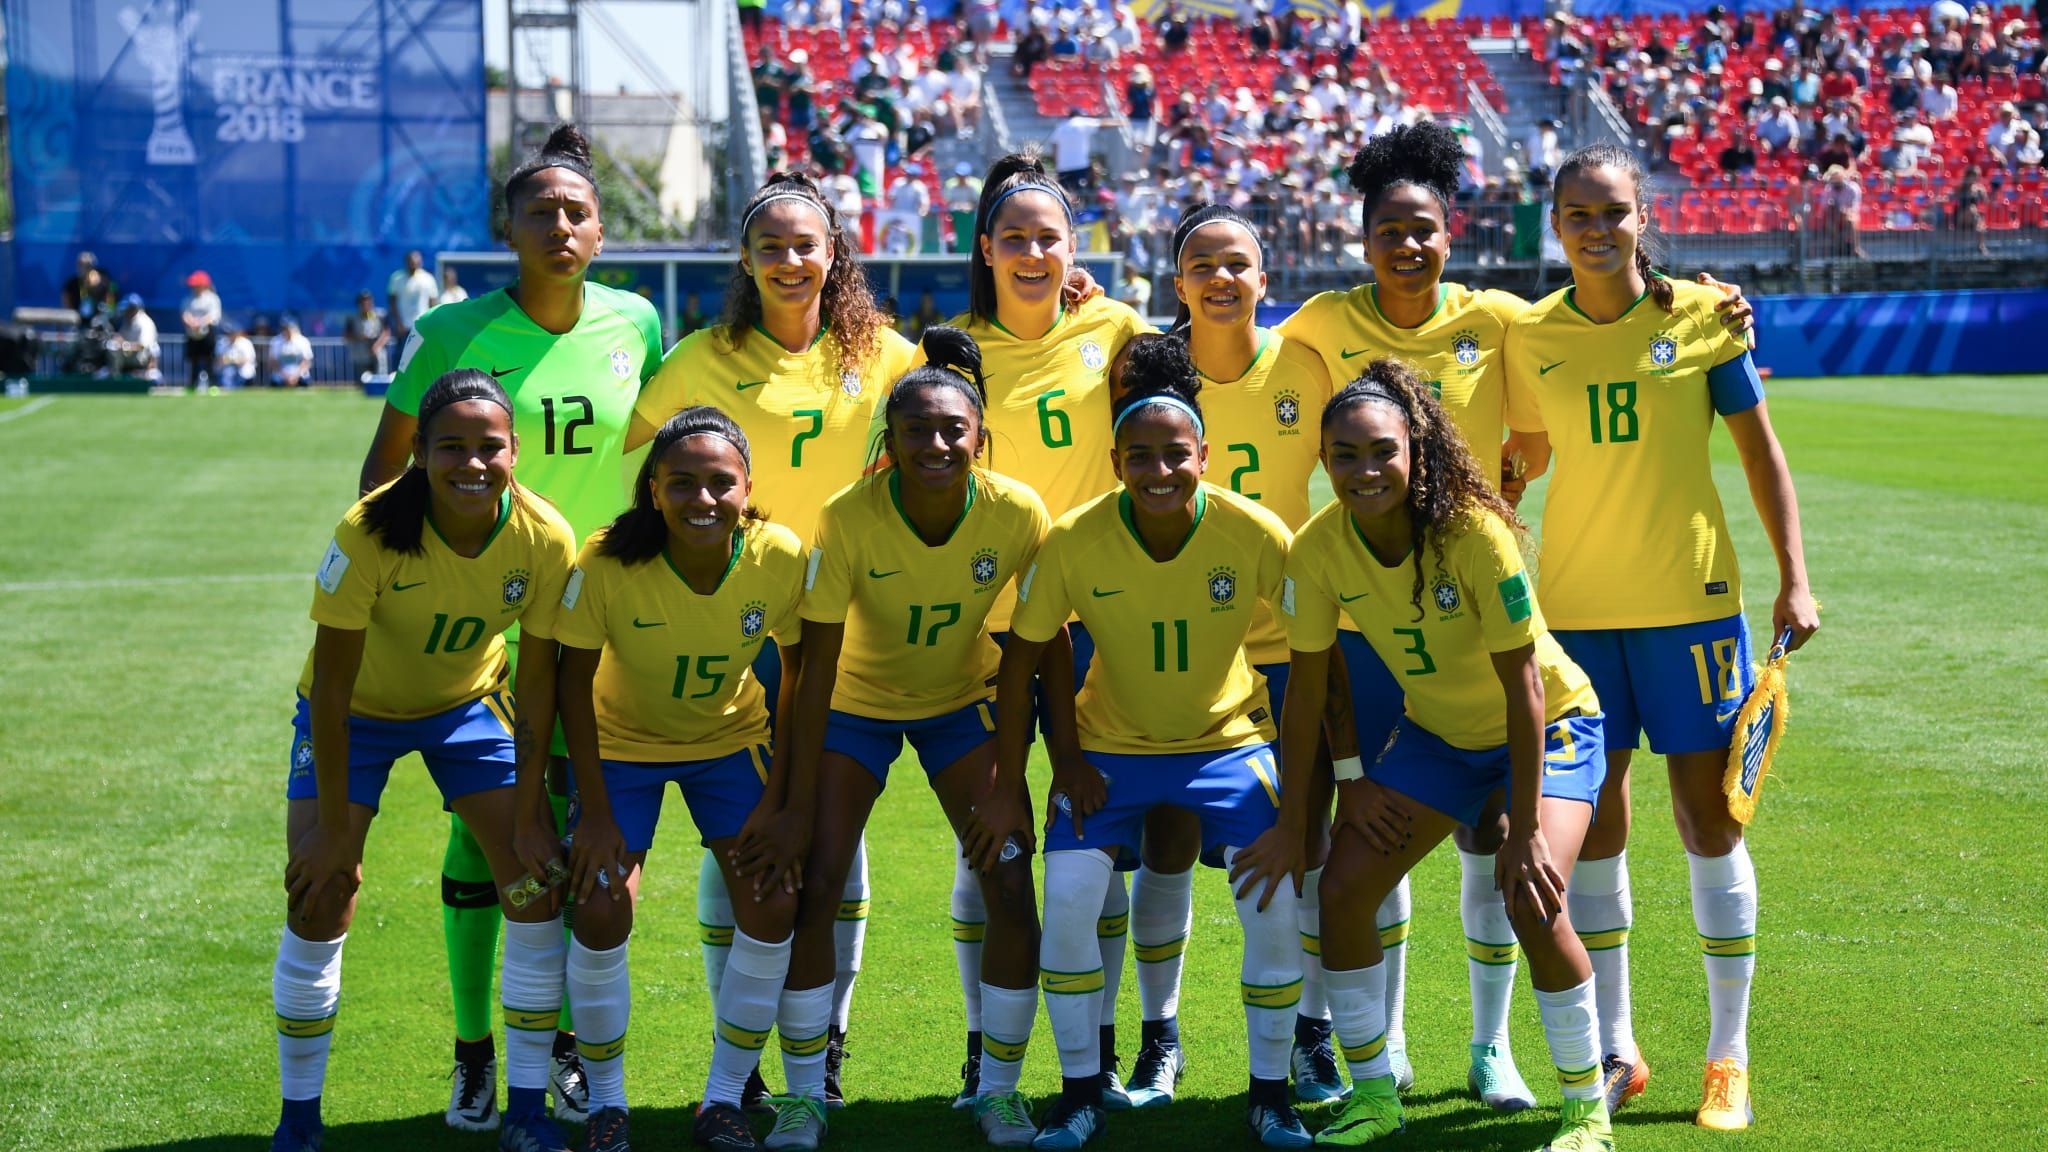 FIFA U 20 Women's World Cup 2018